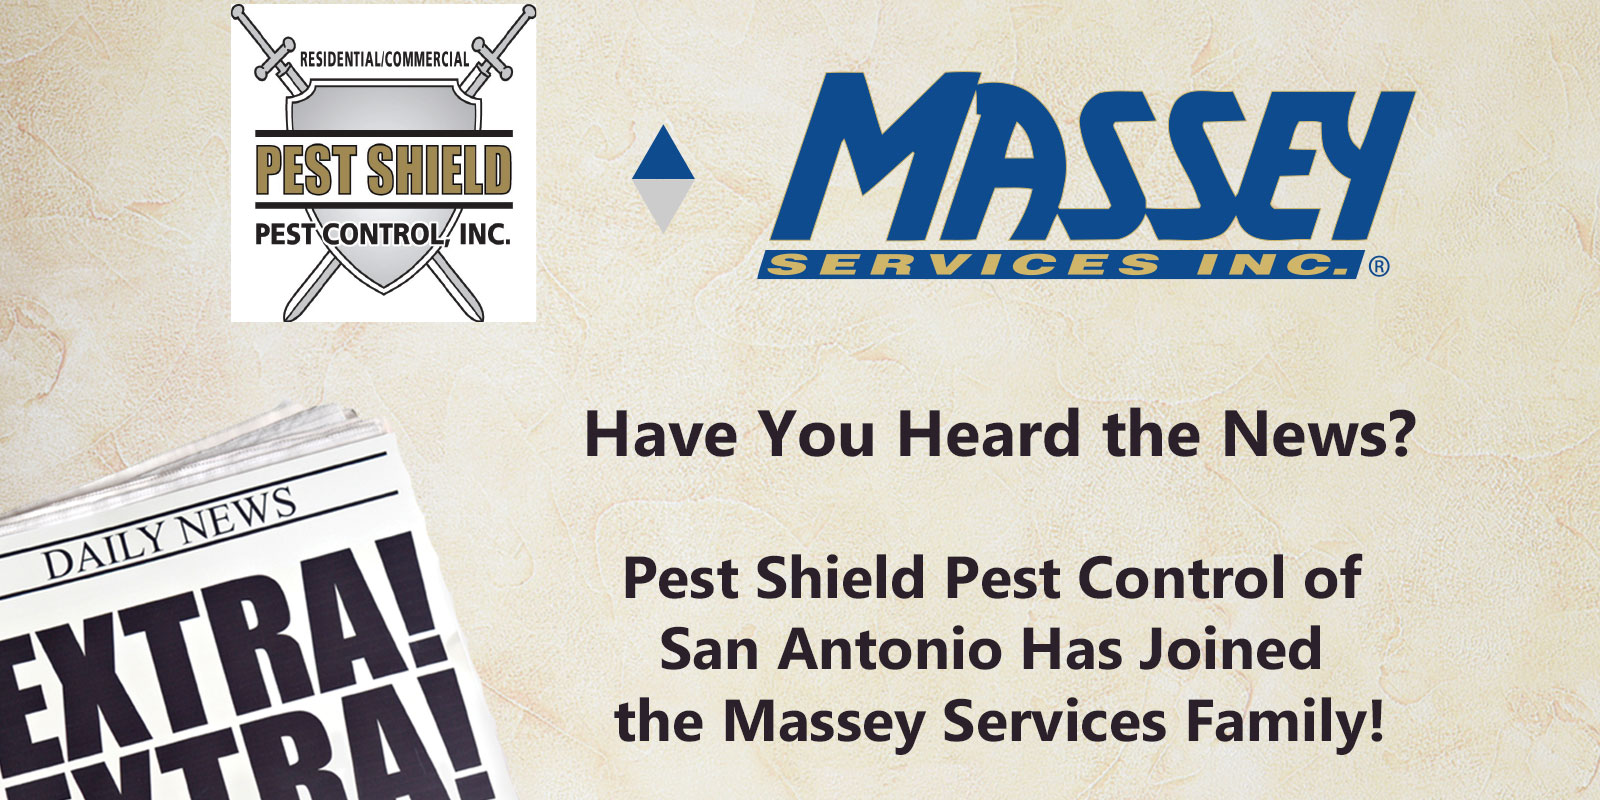 Massey Services acquires Pest Shield in San Antonio TX
